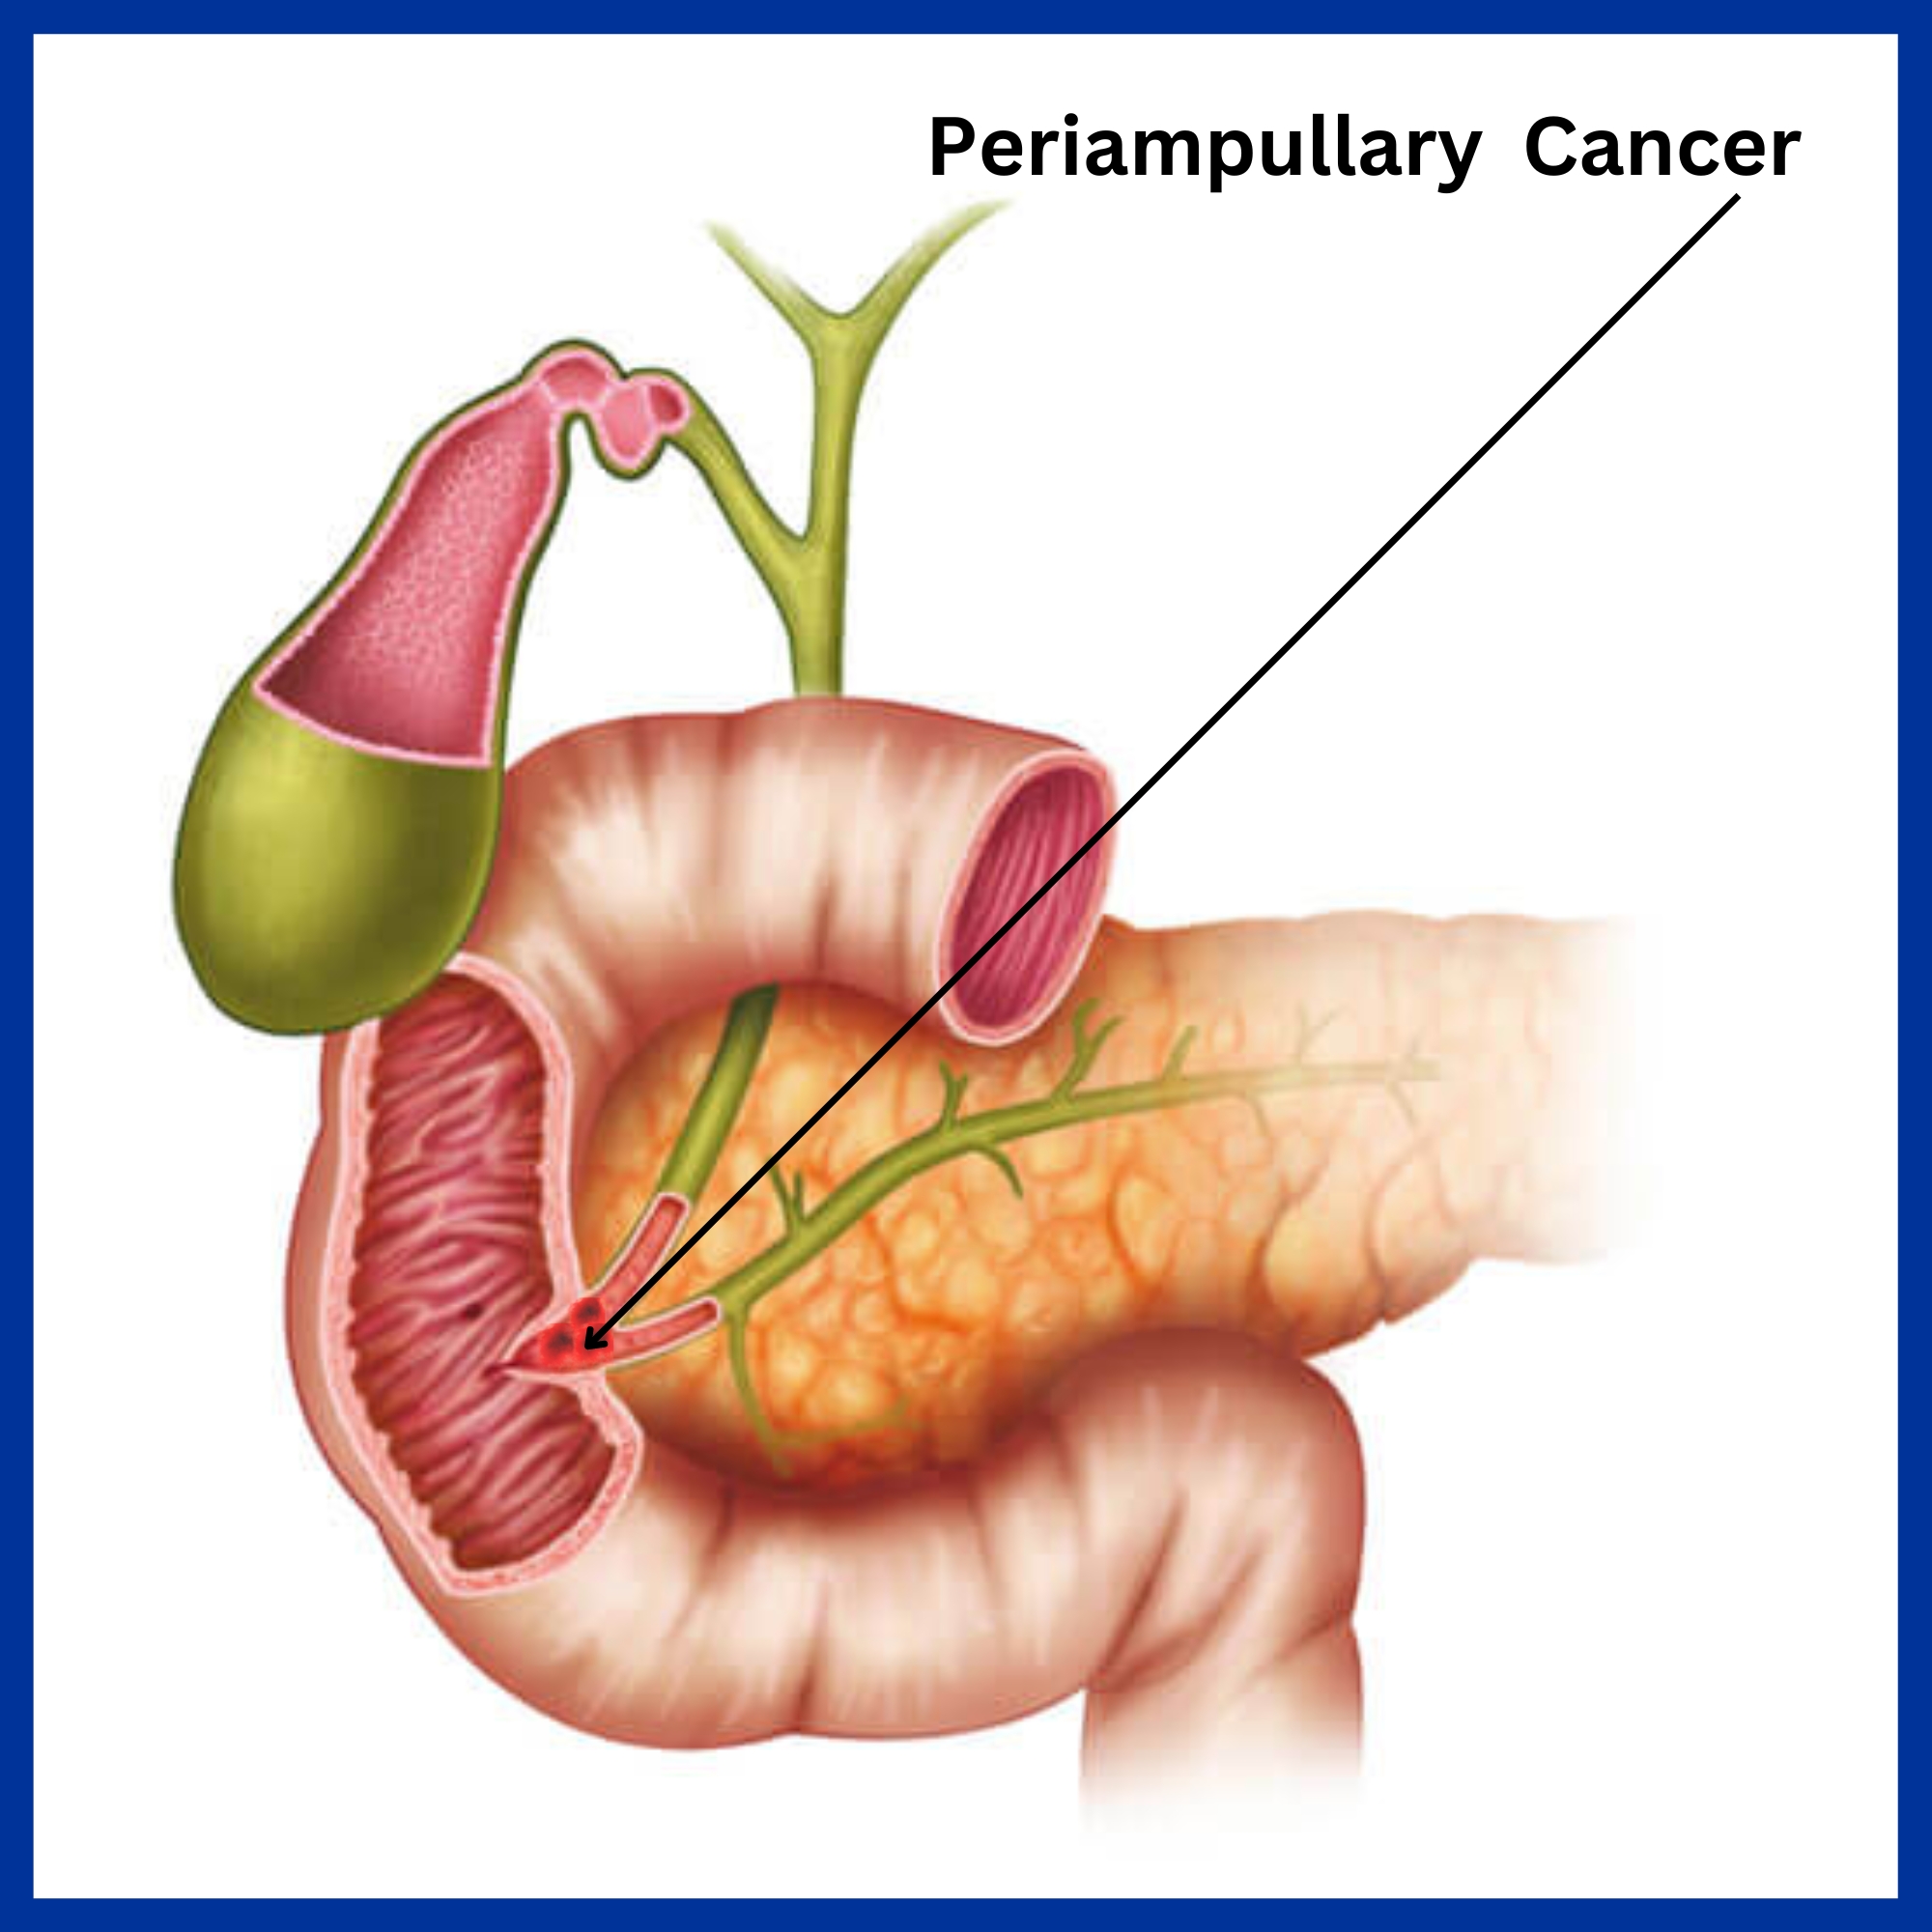 Periampullary Cancer